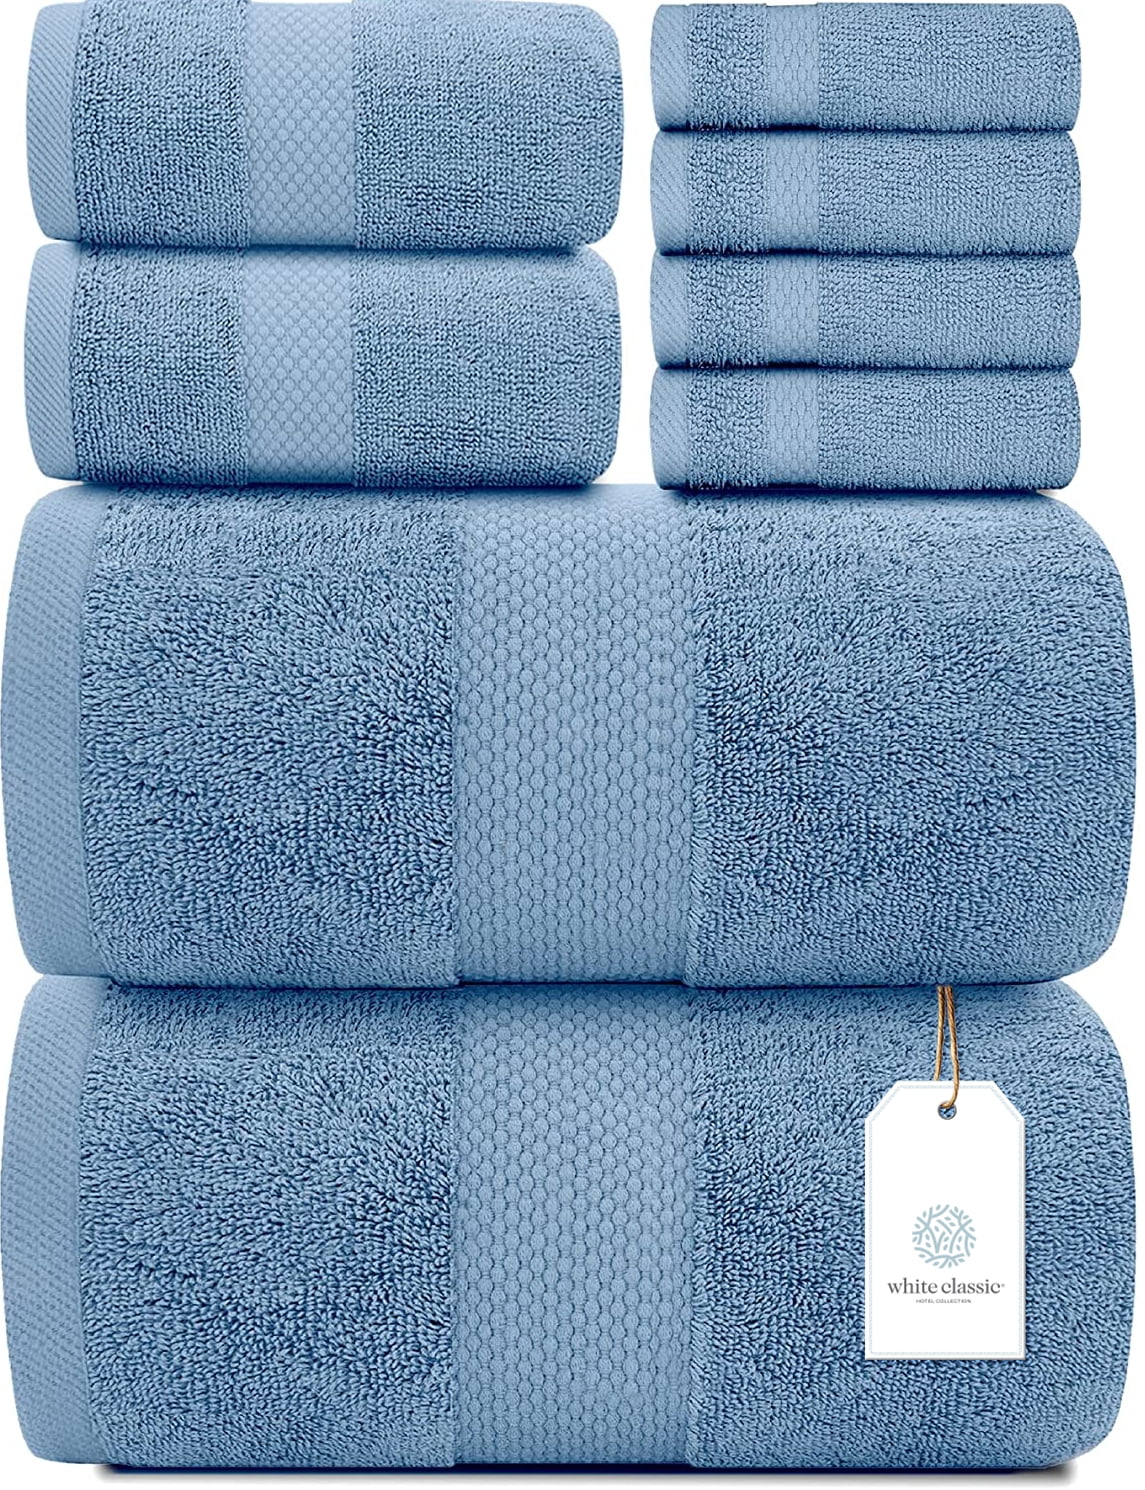 Classic Blue Towel Spa Bundle (2 Wash + 2 Hand + 4 Bath Towels